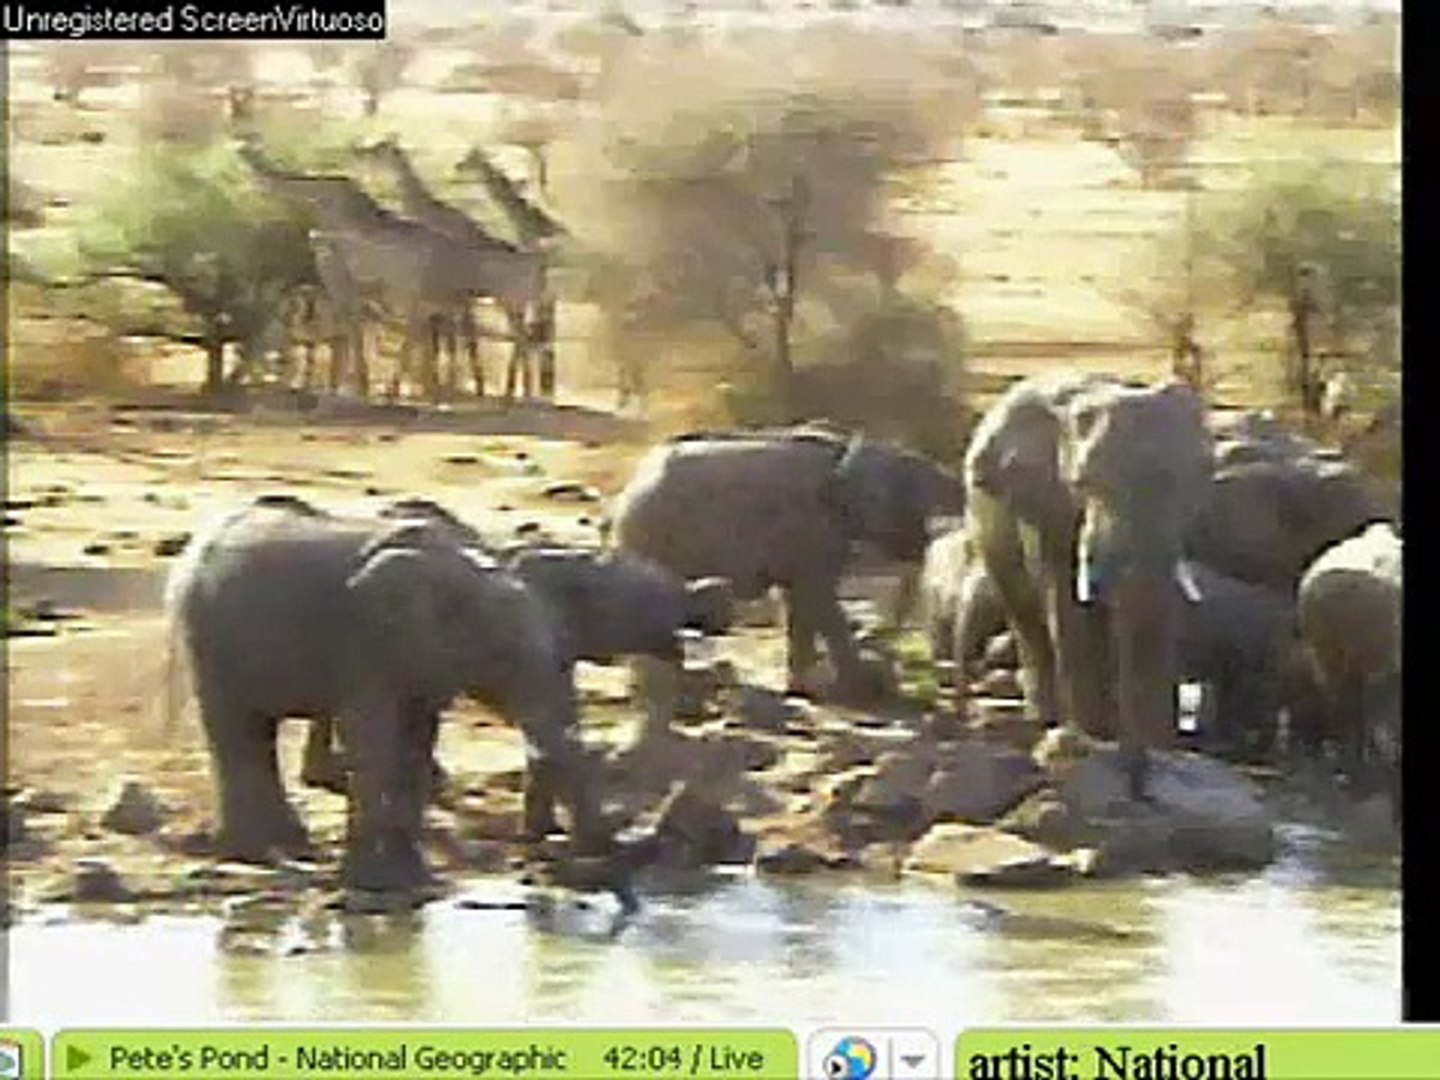 Giraffes & Elephants 10-11-06